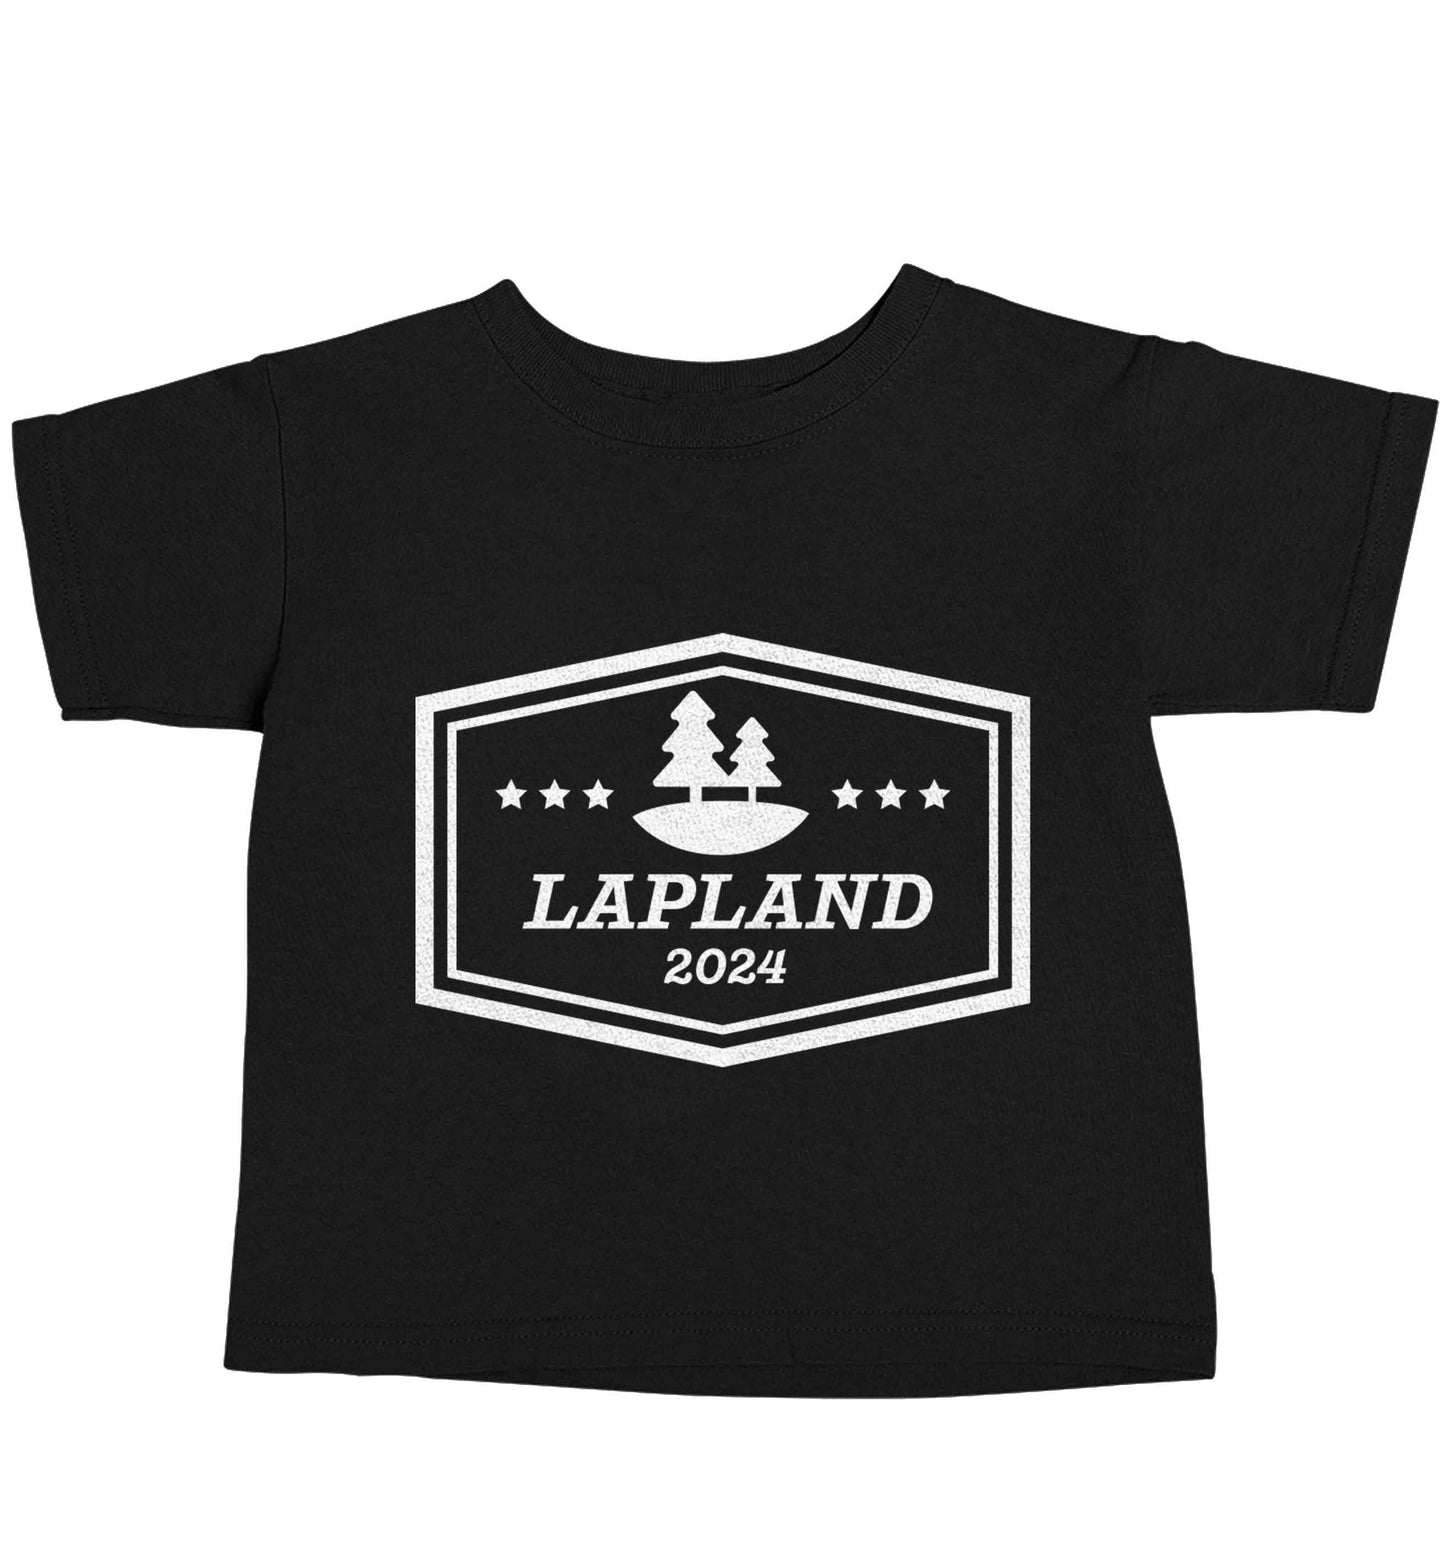 Custom date Lapland Black baby toddler Tshirt 2 years